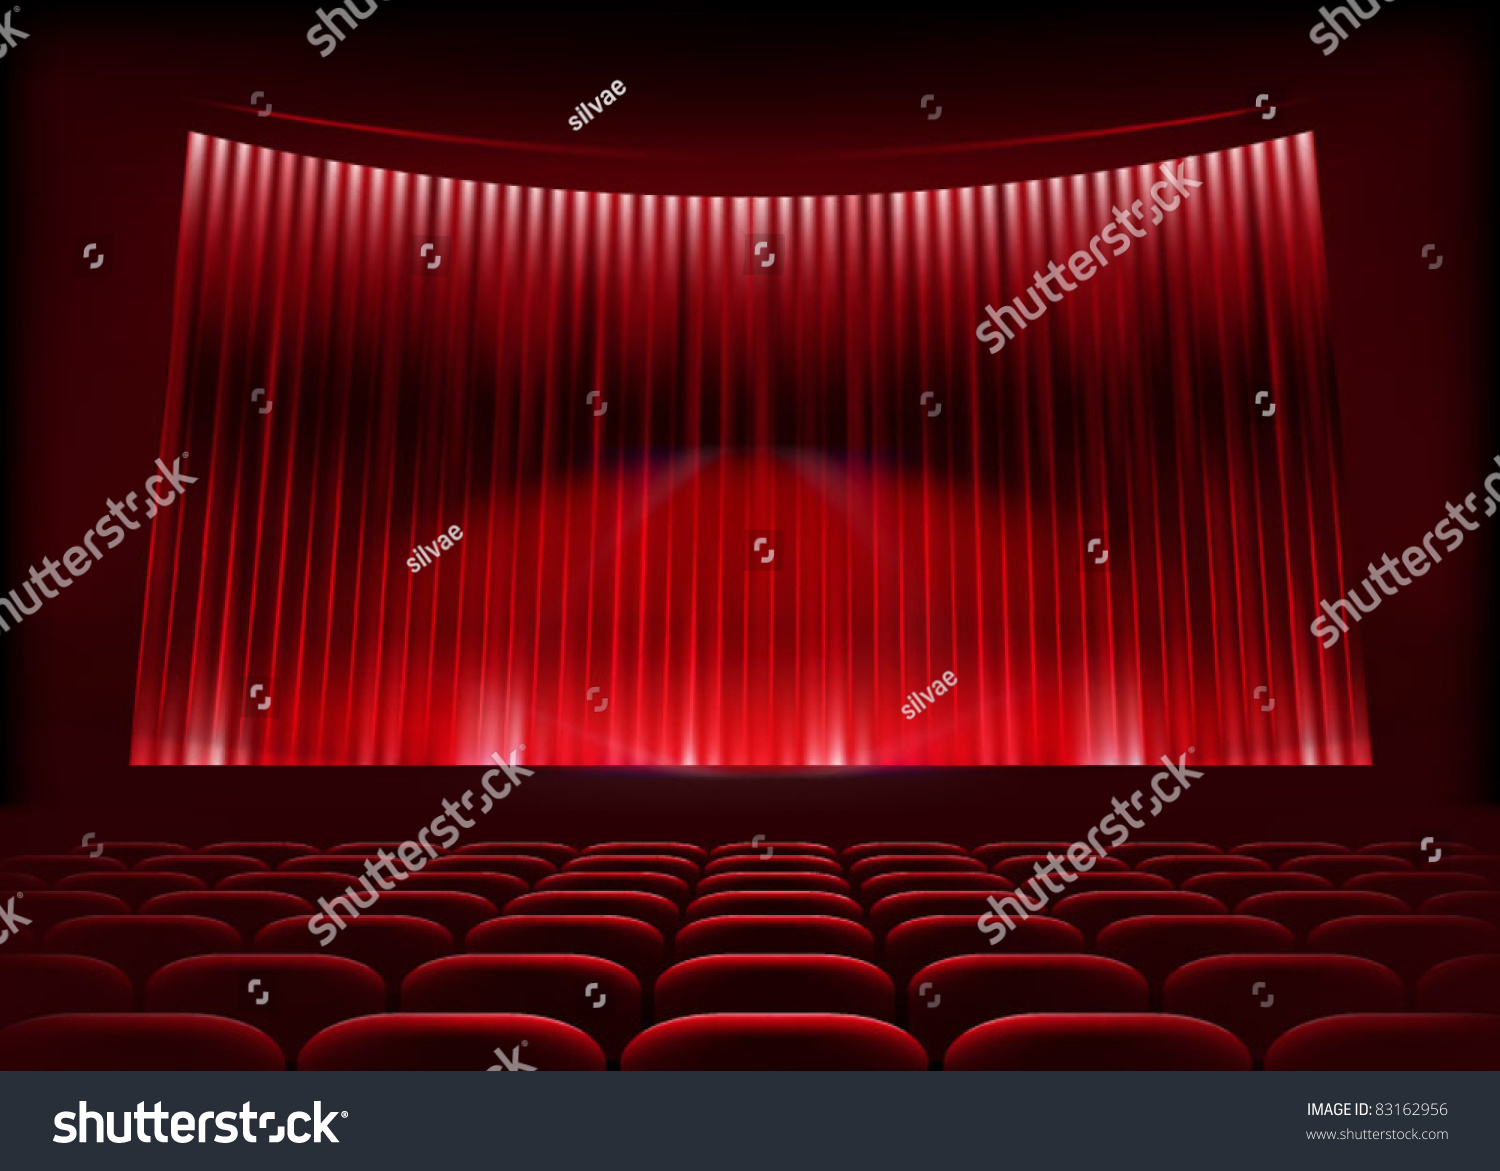 Cinema Auditorium With Stage Curtain. Vector Illustration. - 83162956 ...